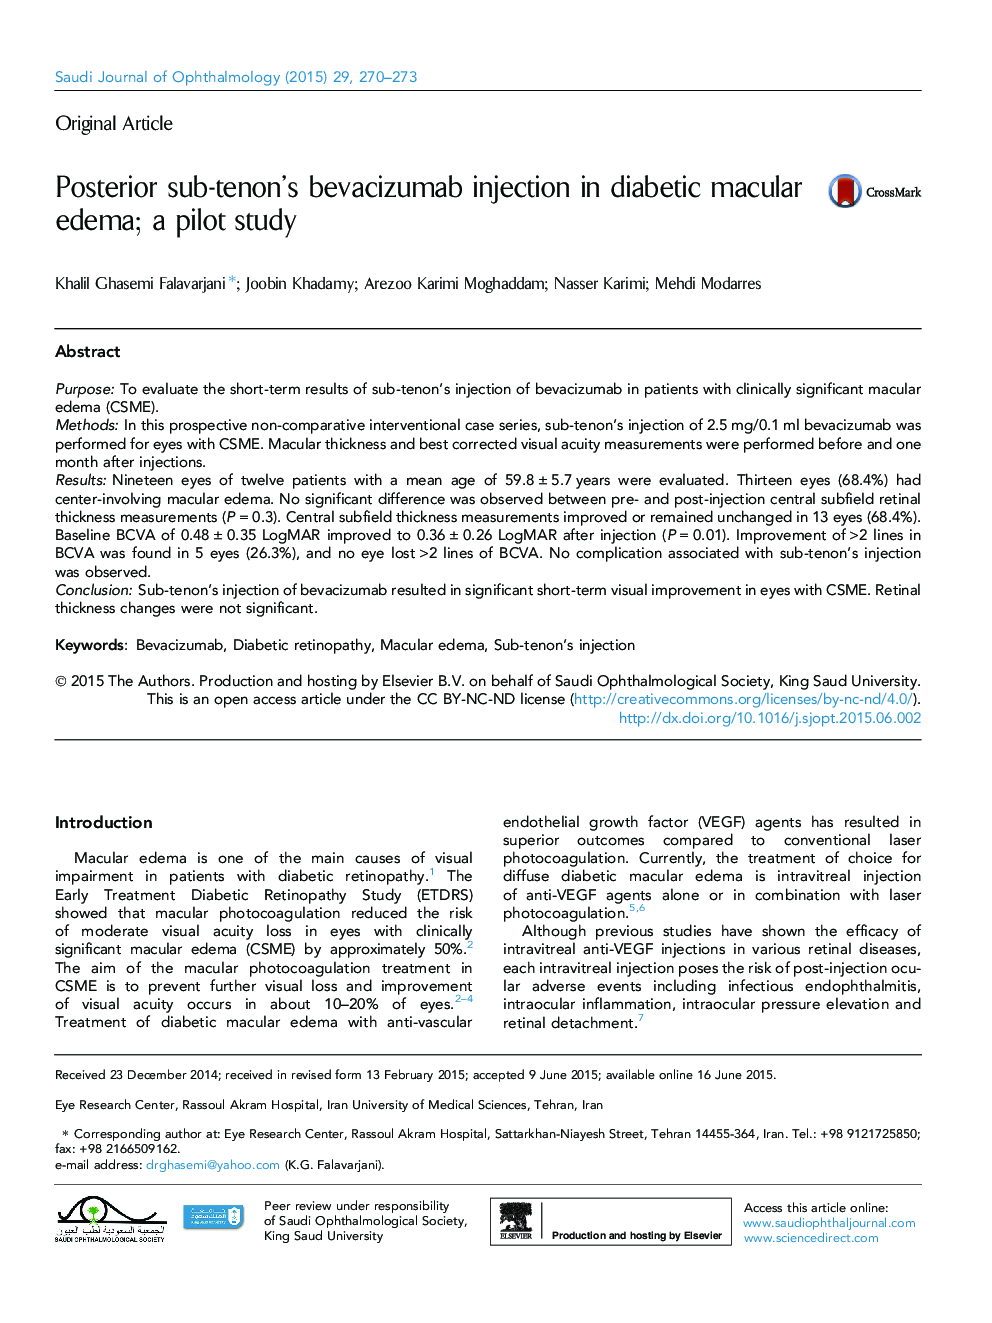 Posterior sub-tenon’s bevacizumab injection in diabetic macular edema; a pilot study 